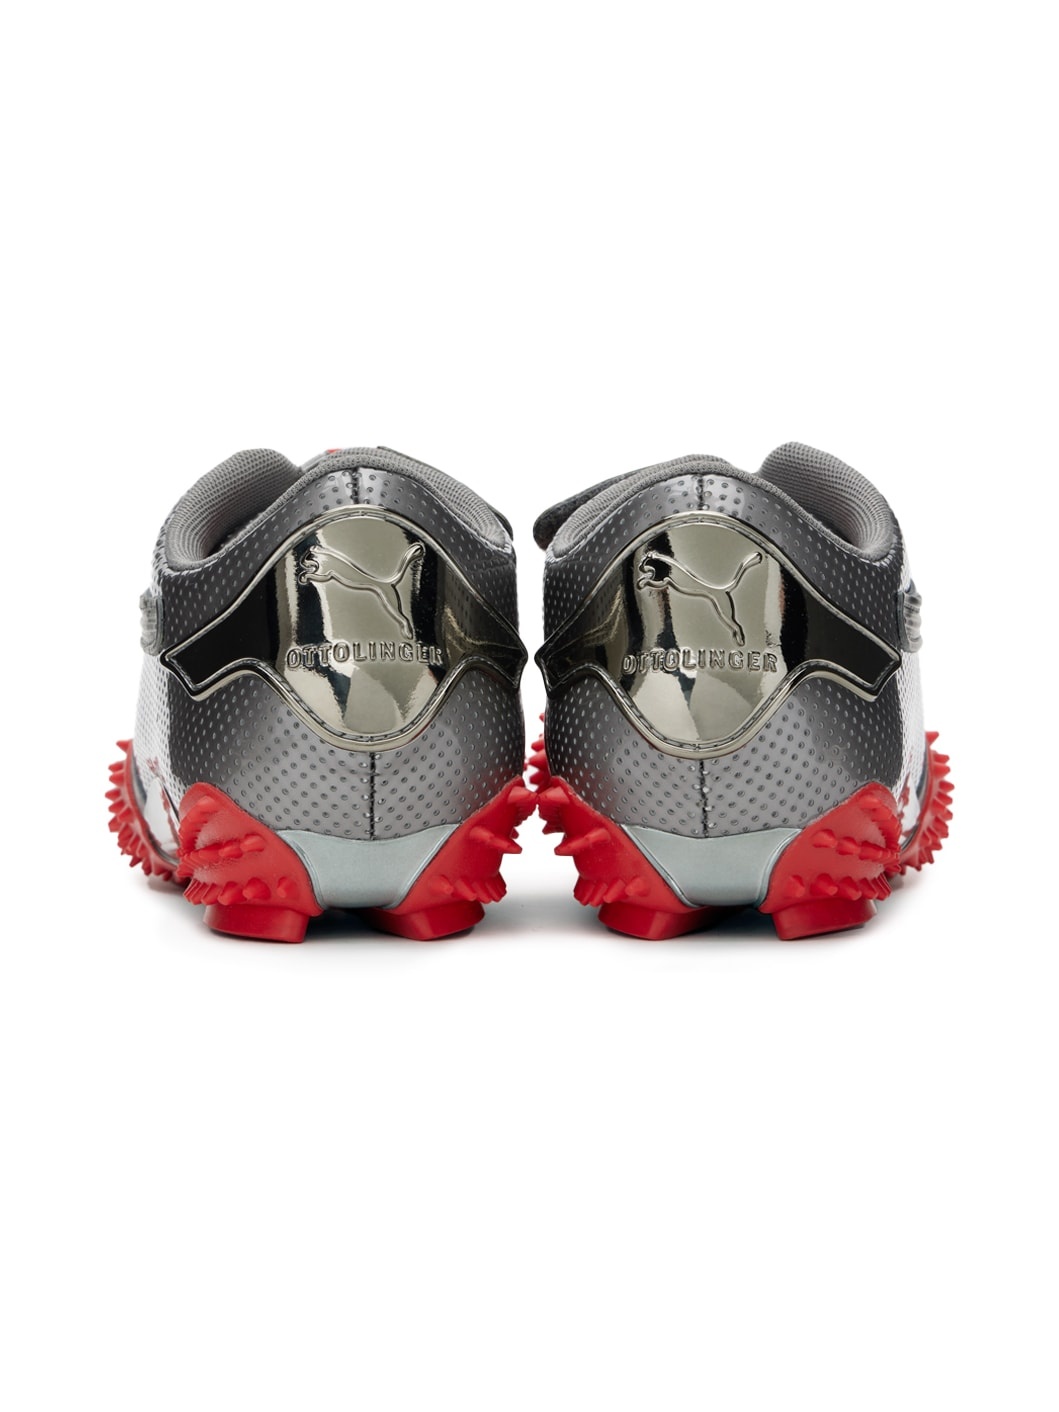 Gray & Red Puma Edition Mostro Lo Sneakers - 2